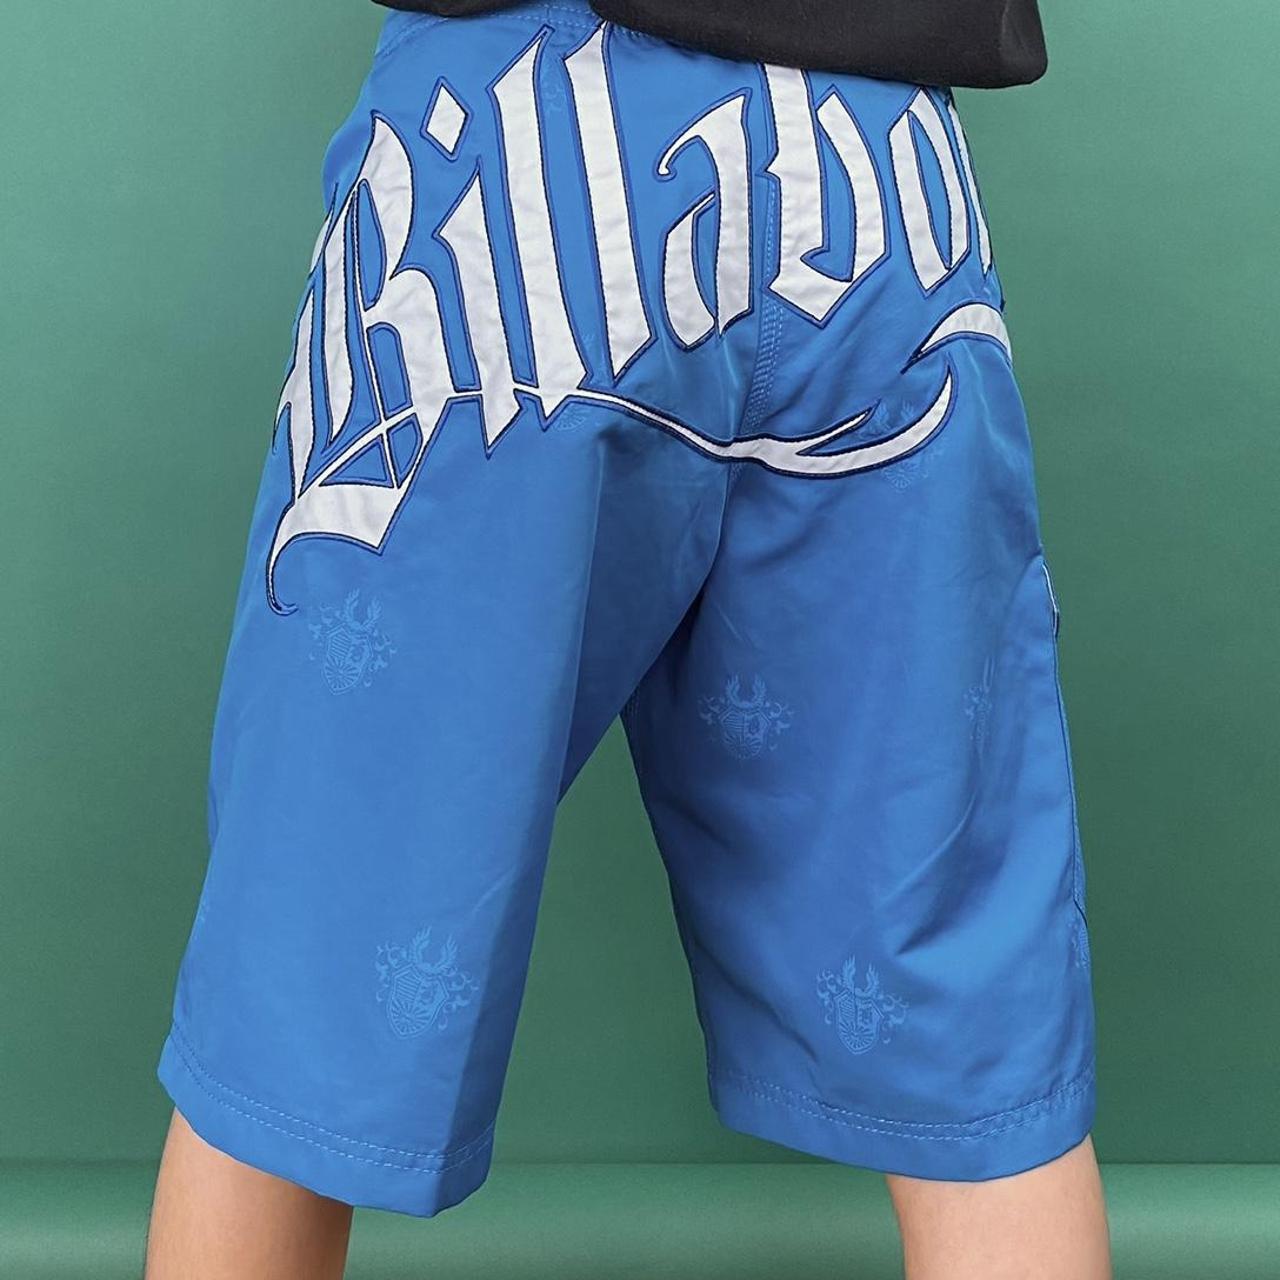 Billabong Men's Blue and White Shorts | Depop